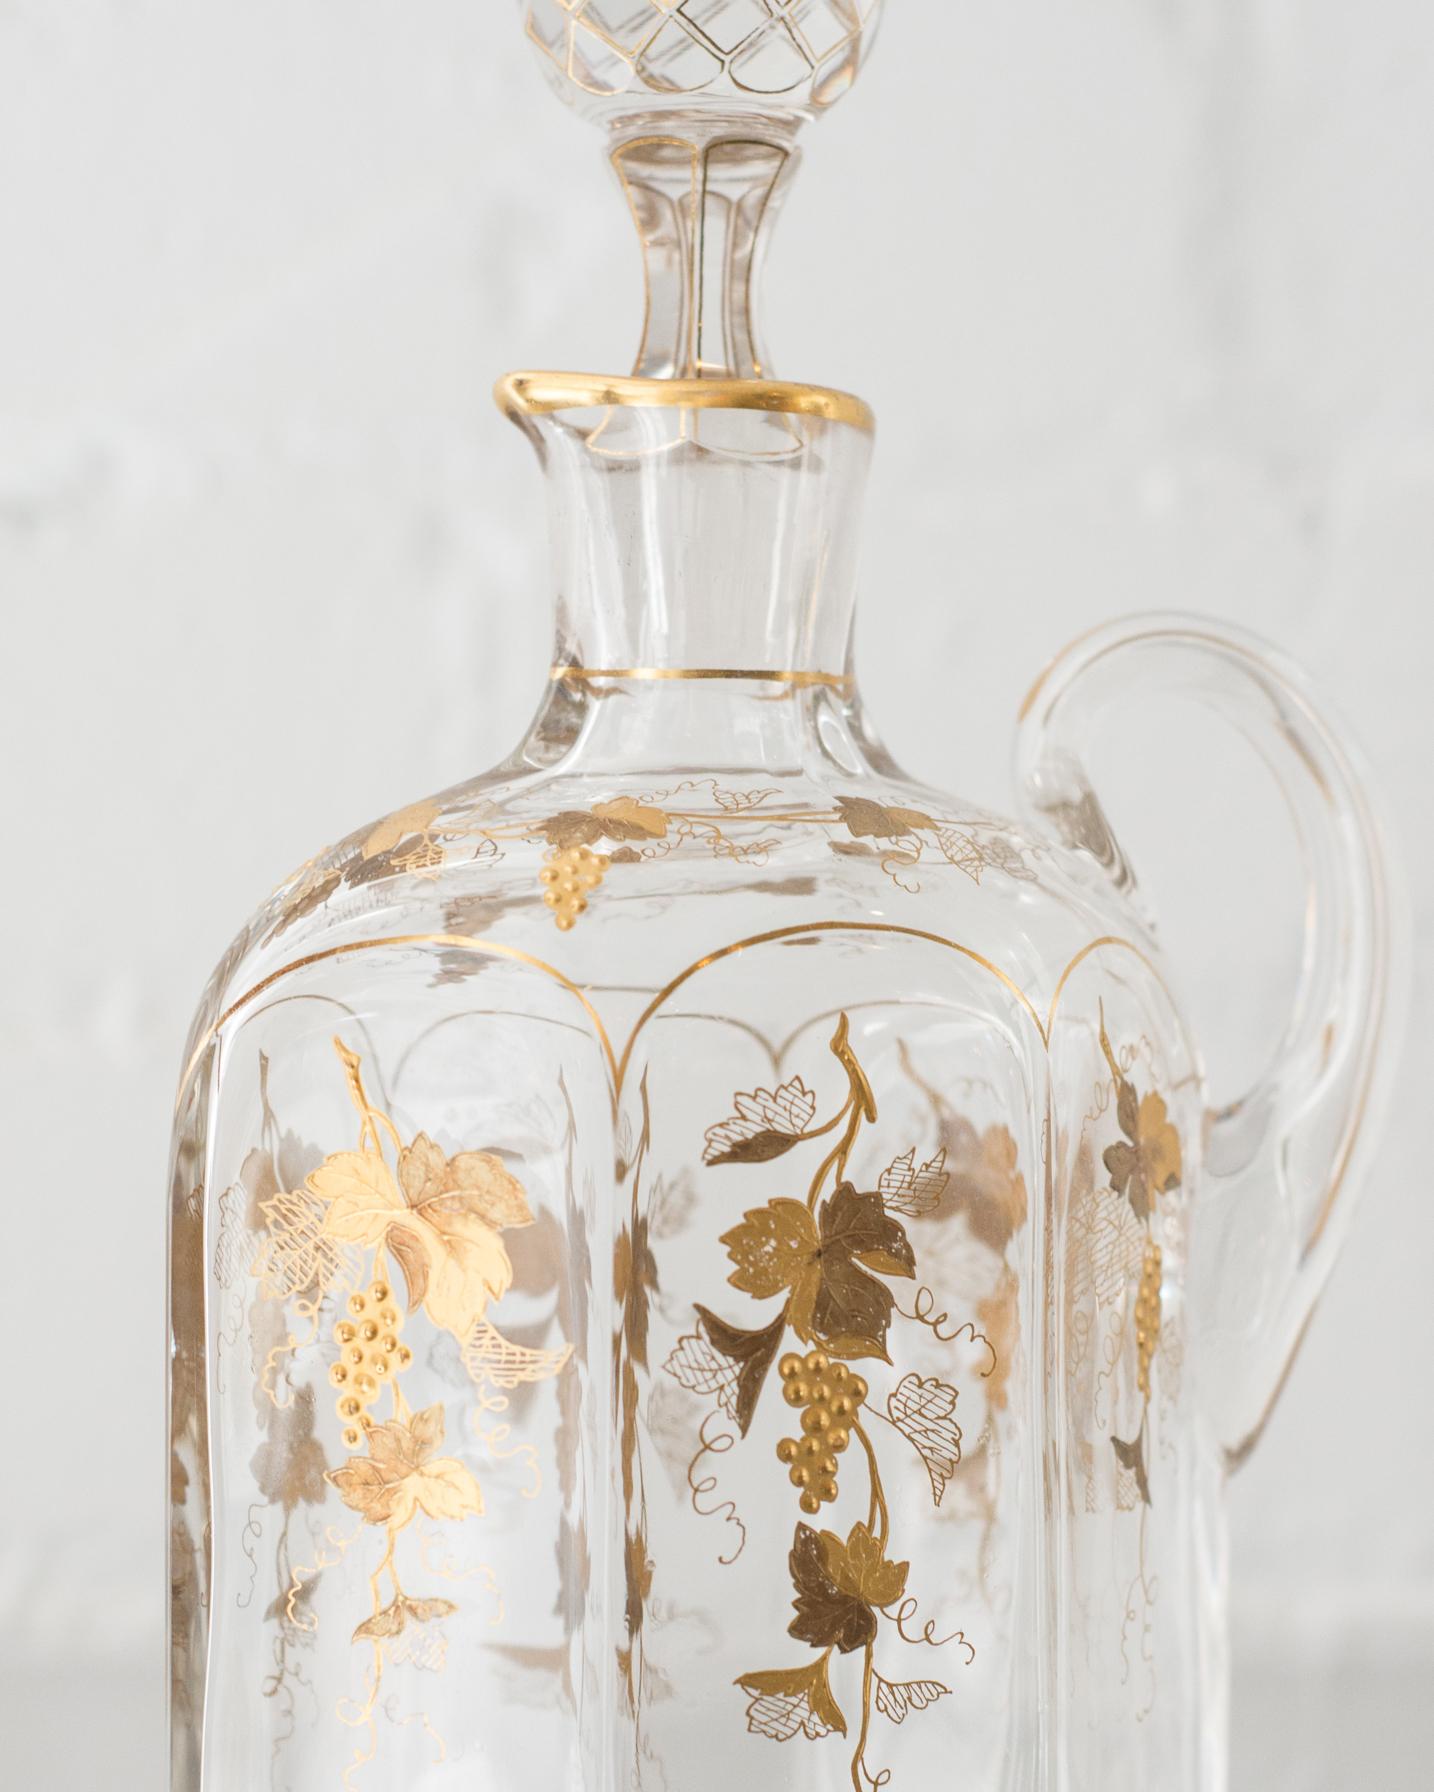 Czech Antique Gold Gilt Glass Decanter with Grapes